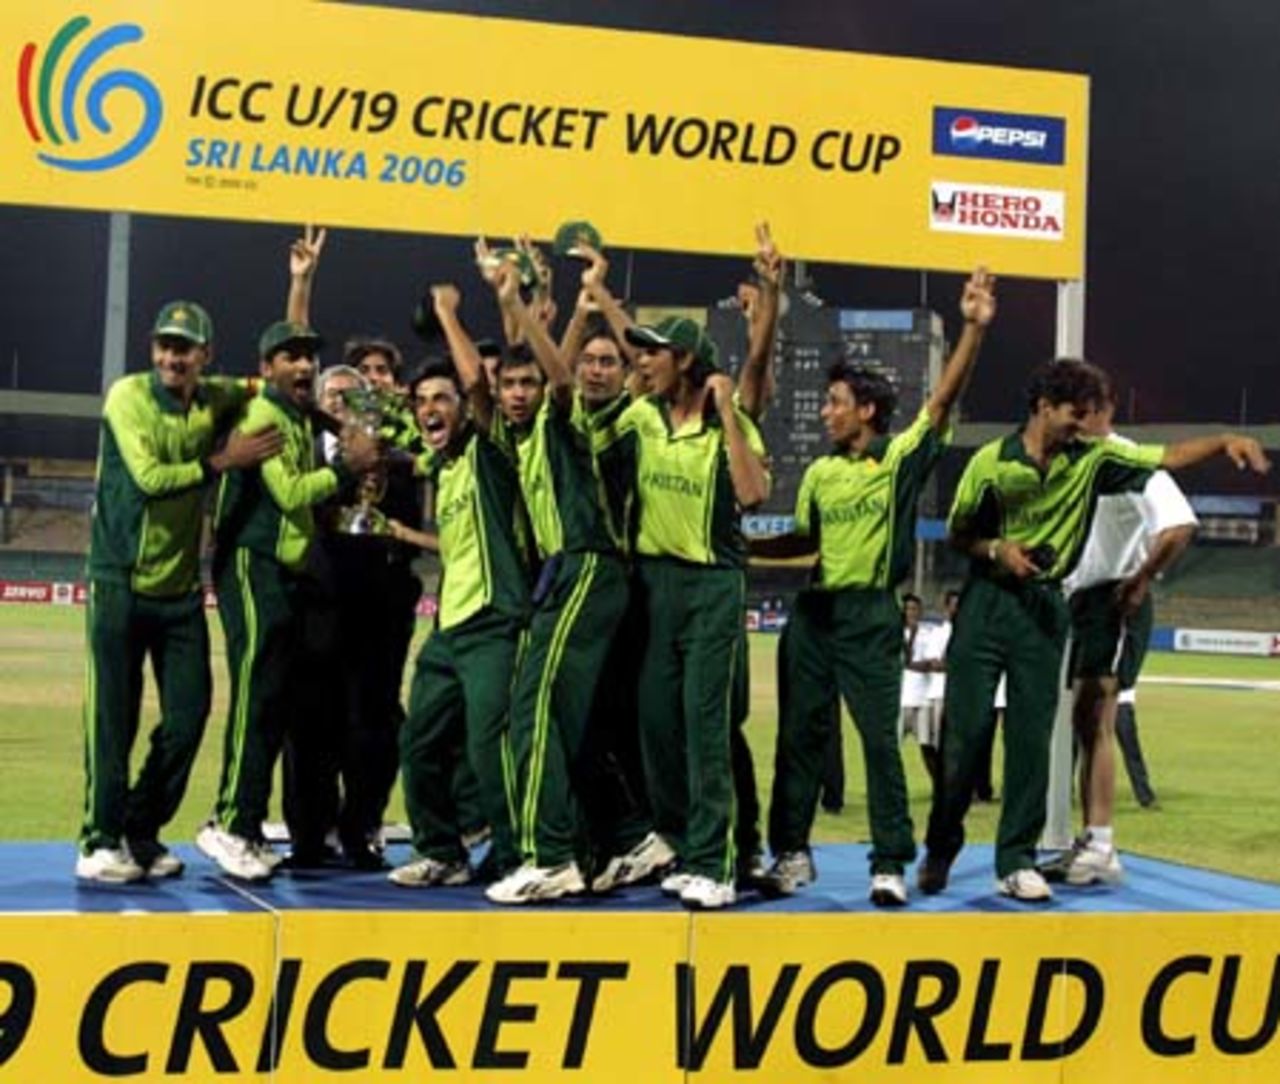 Pakistans players celebrate as they receive the U-19 World Cup